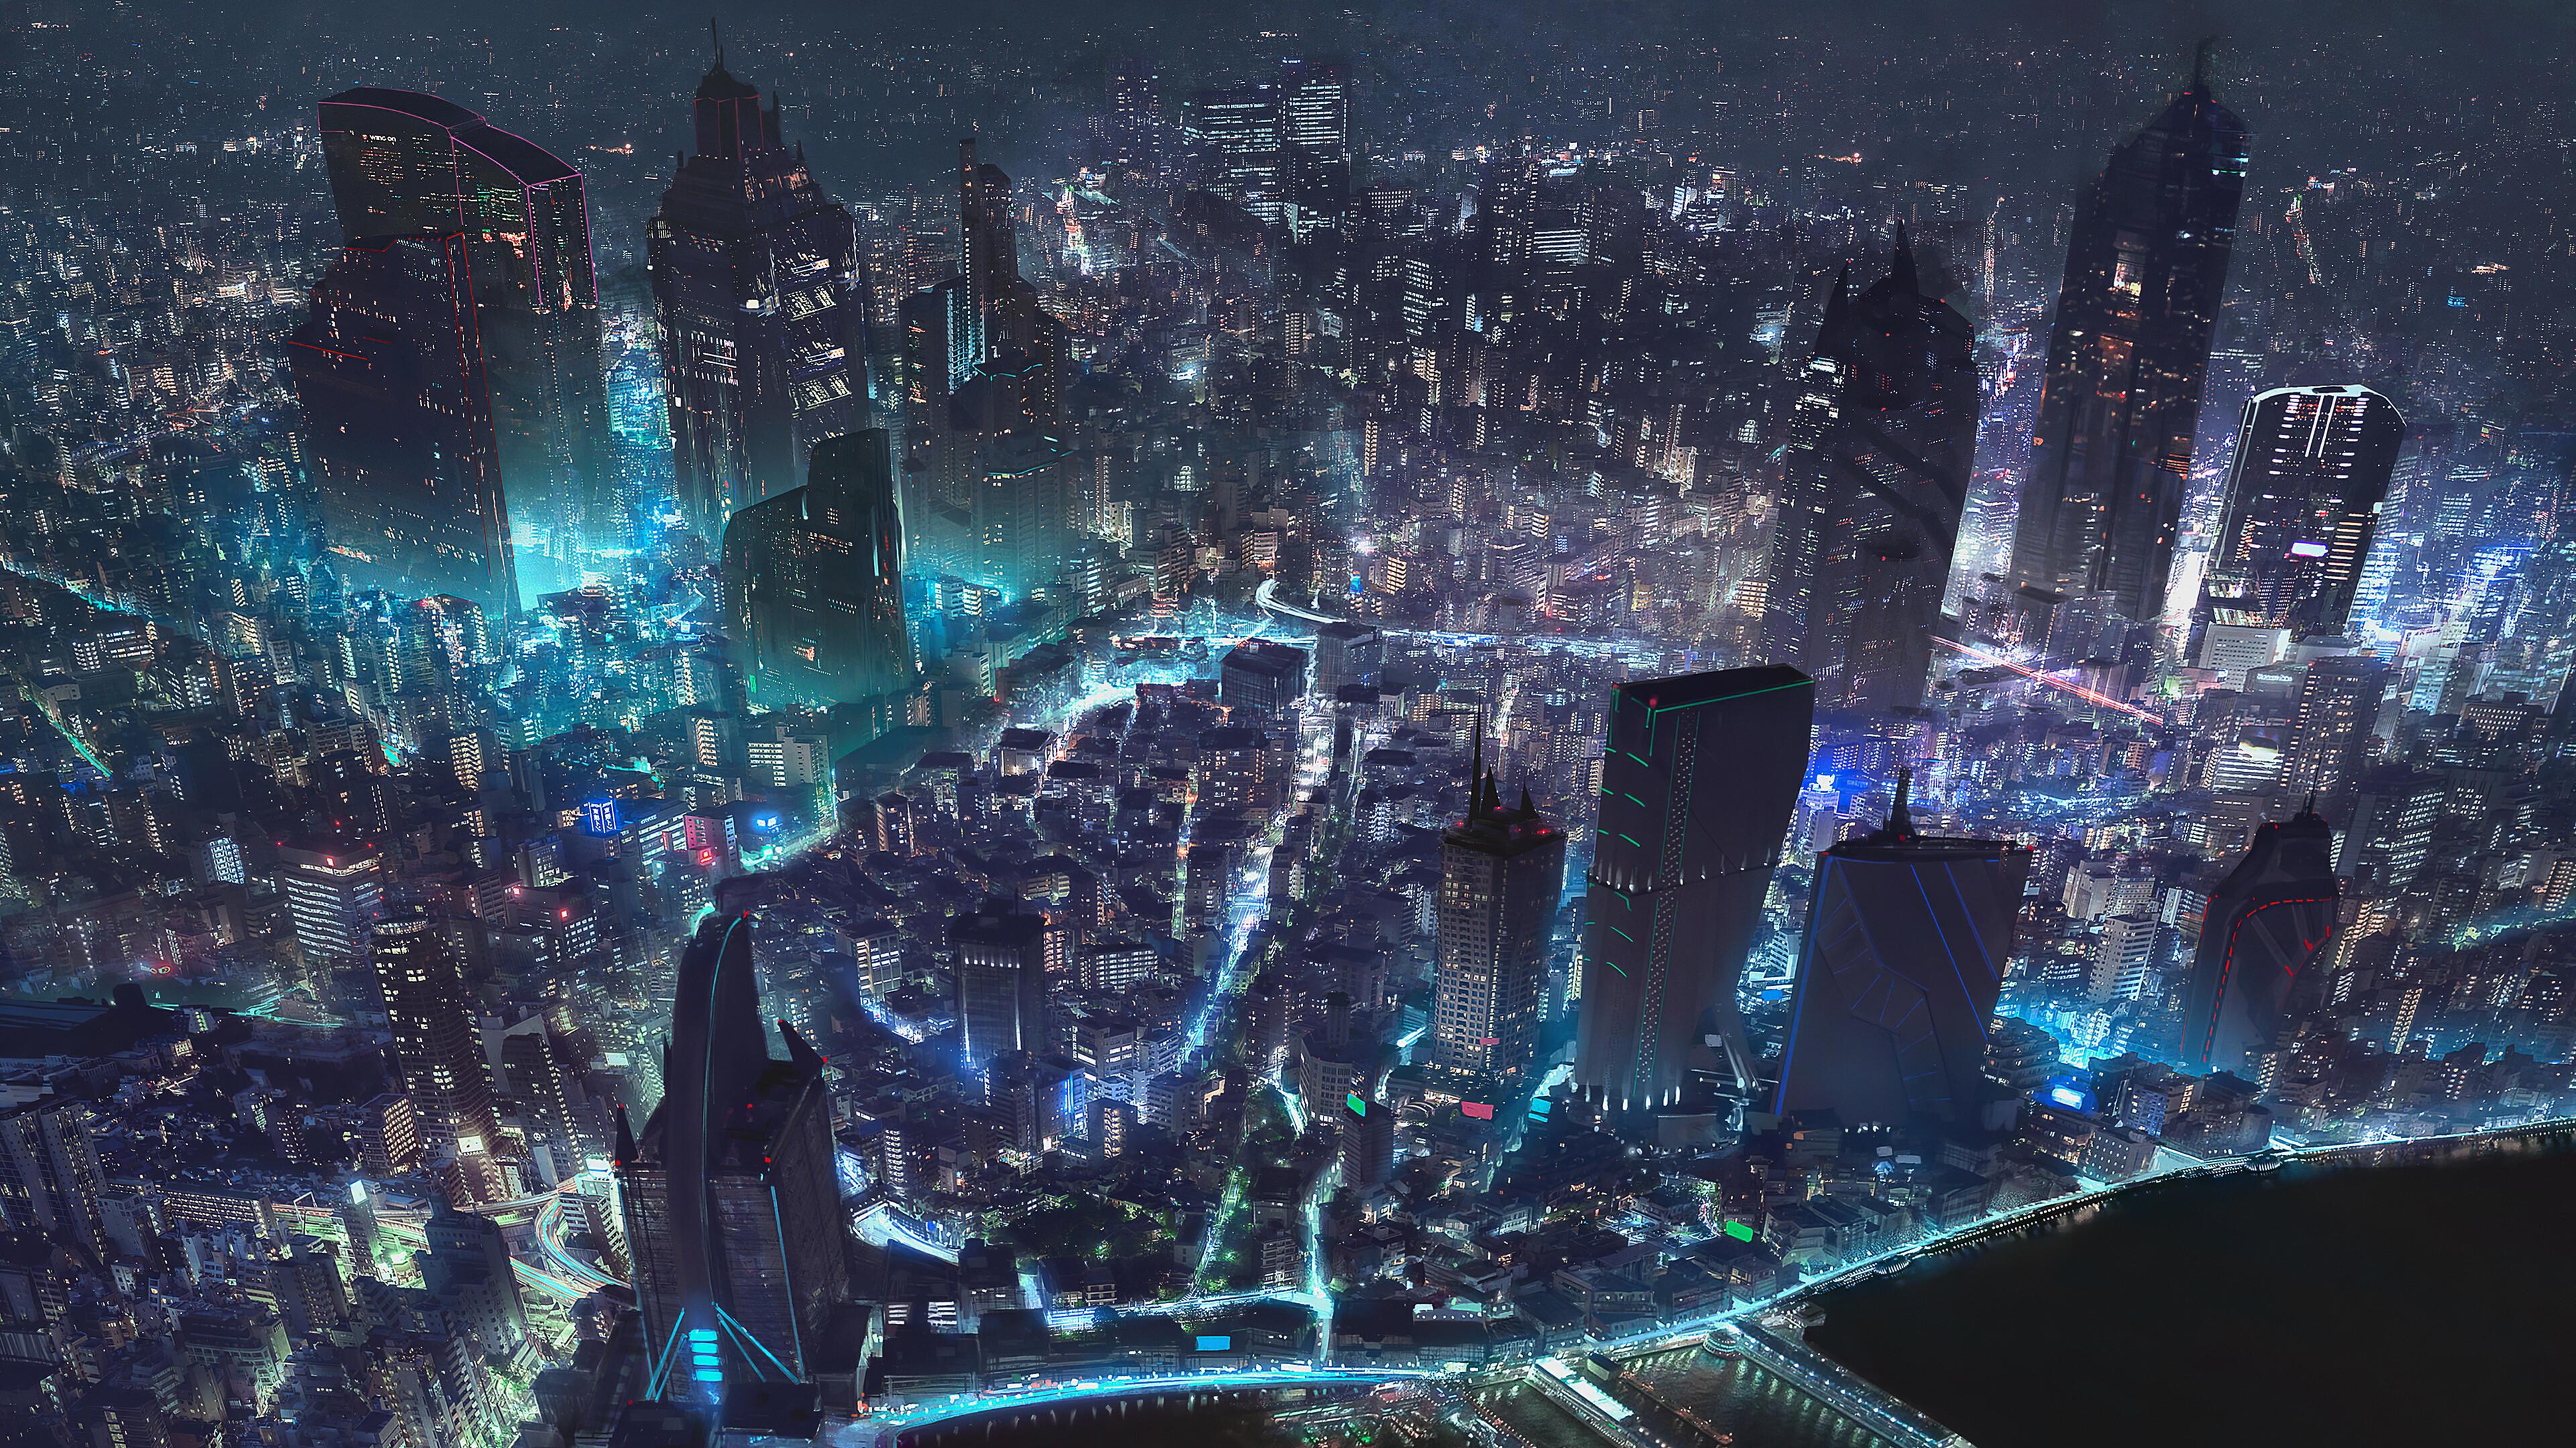 Cyberpunk Night City Sci Fi 4k Wallpaper